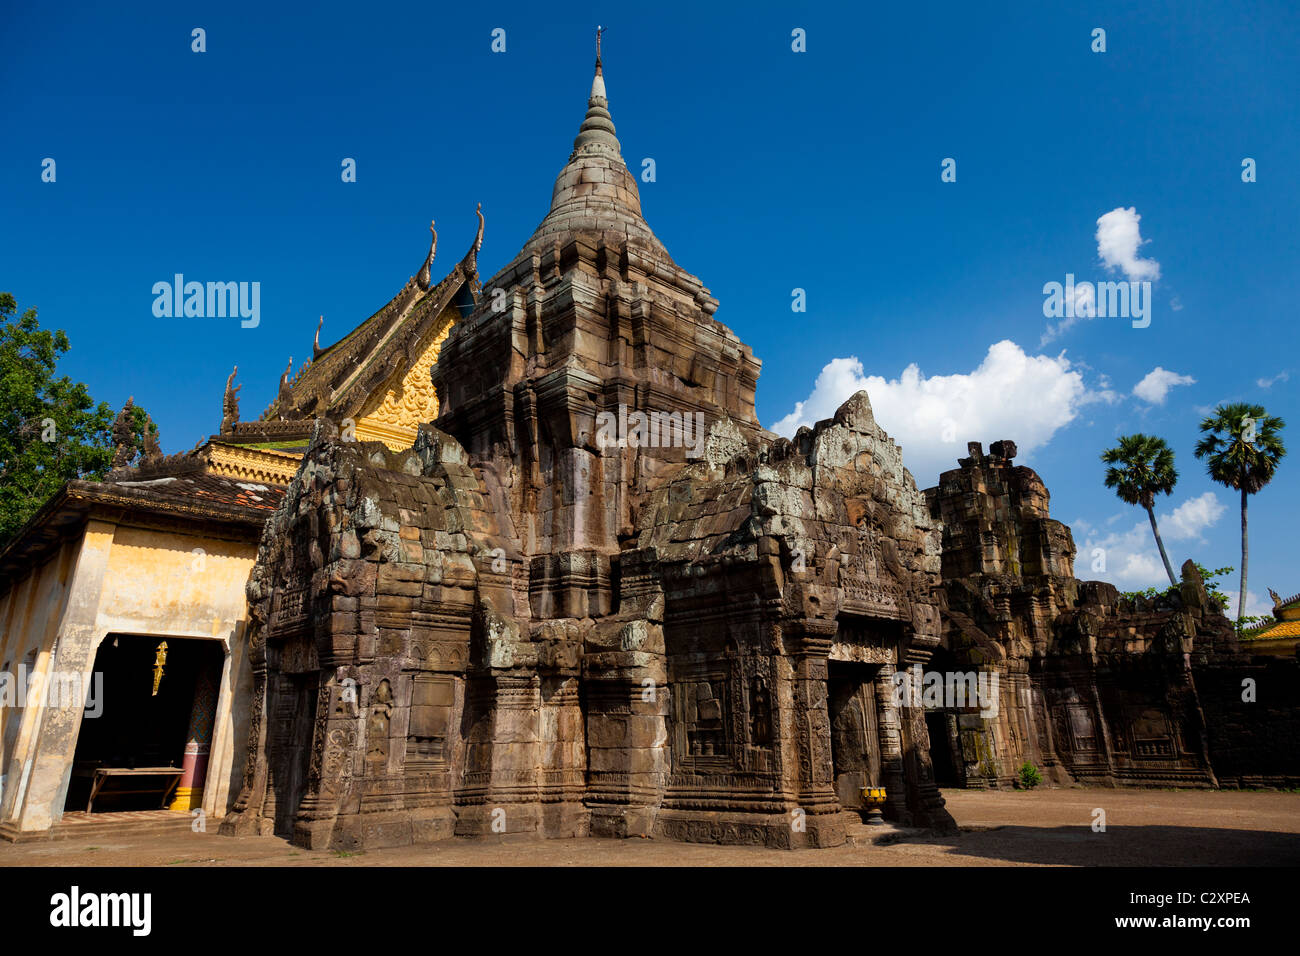 Alten Tempelruinen von Wat Nokor - Provinz Kampong Cham, Kambodscha Stockfoto